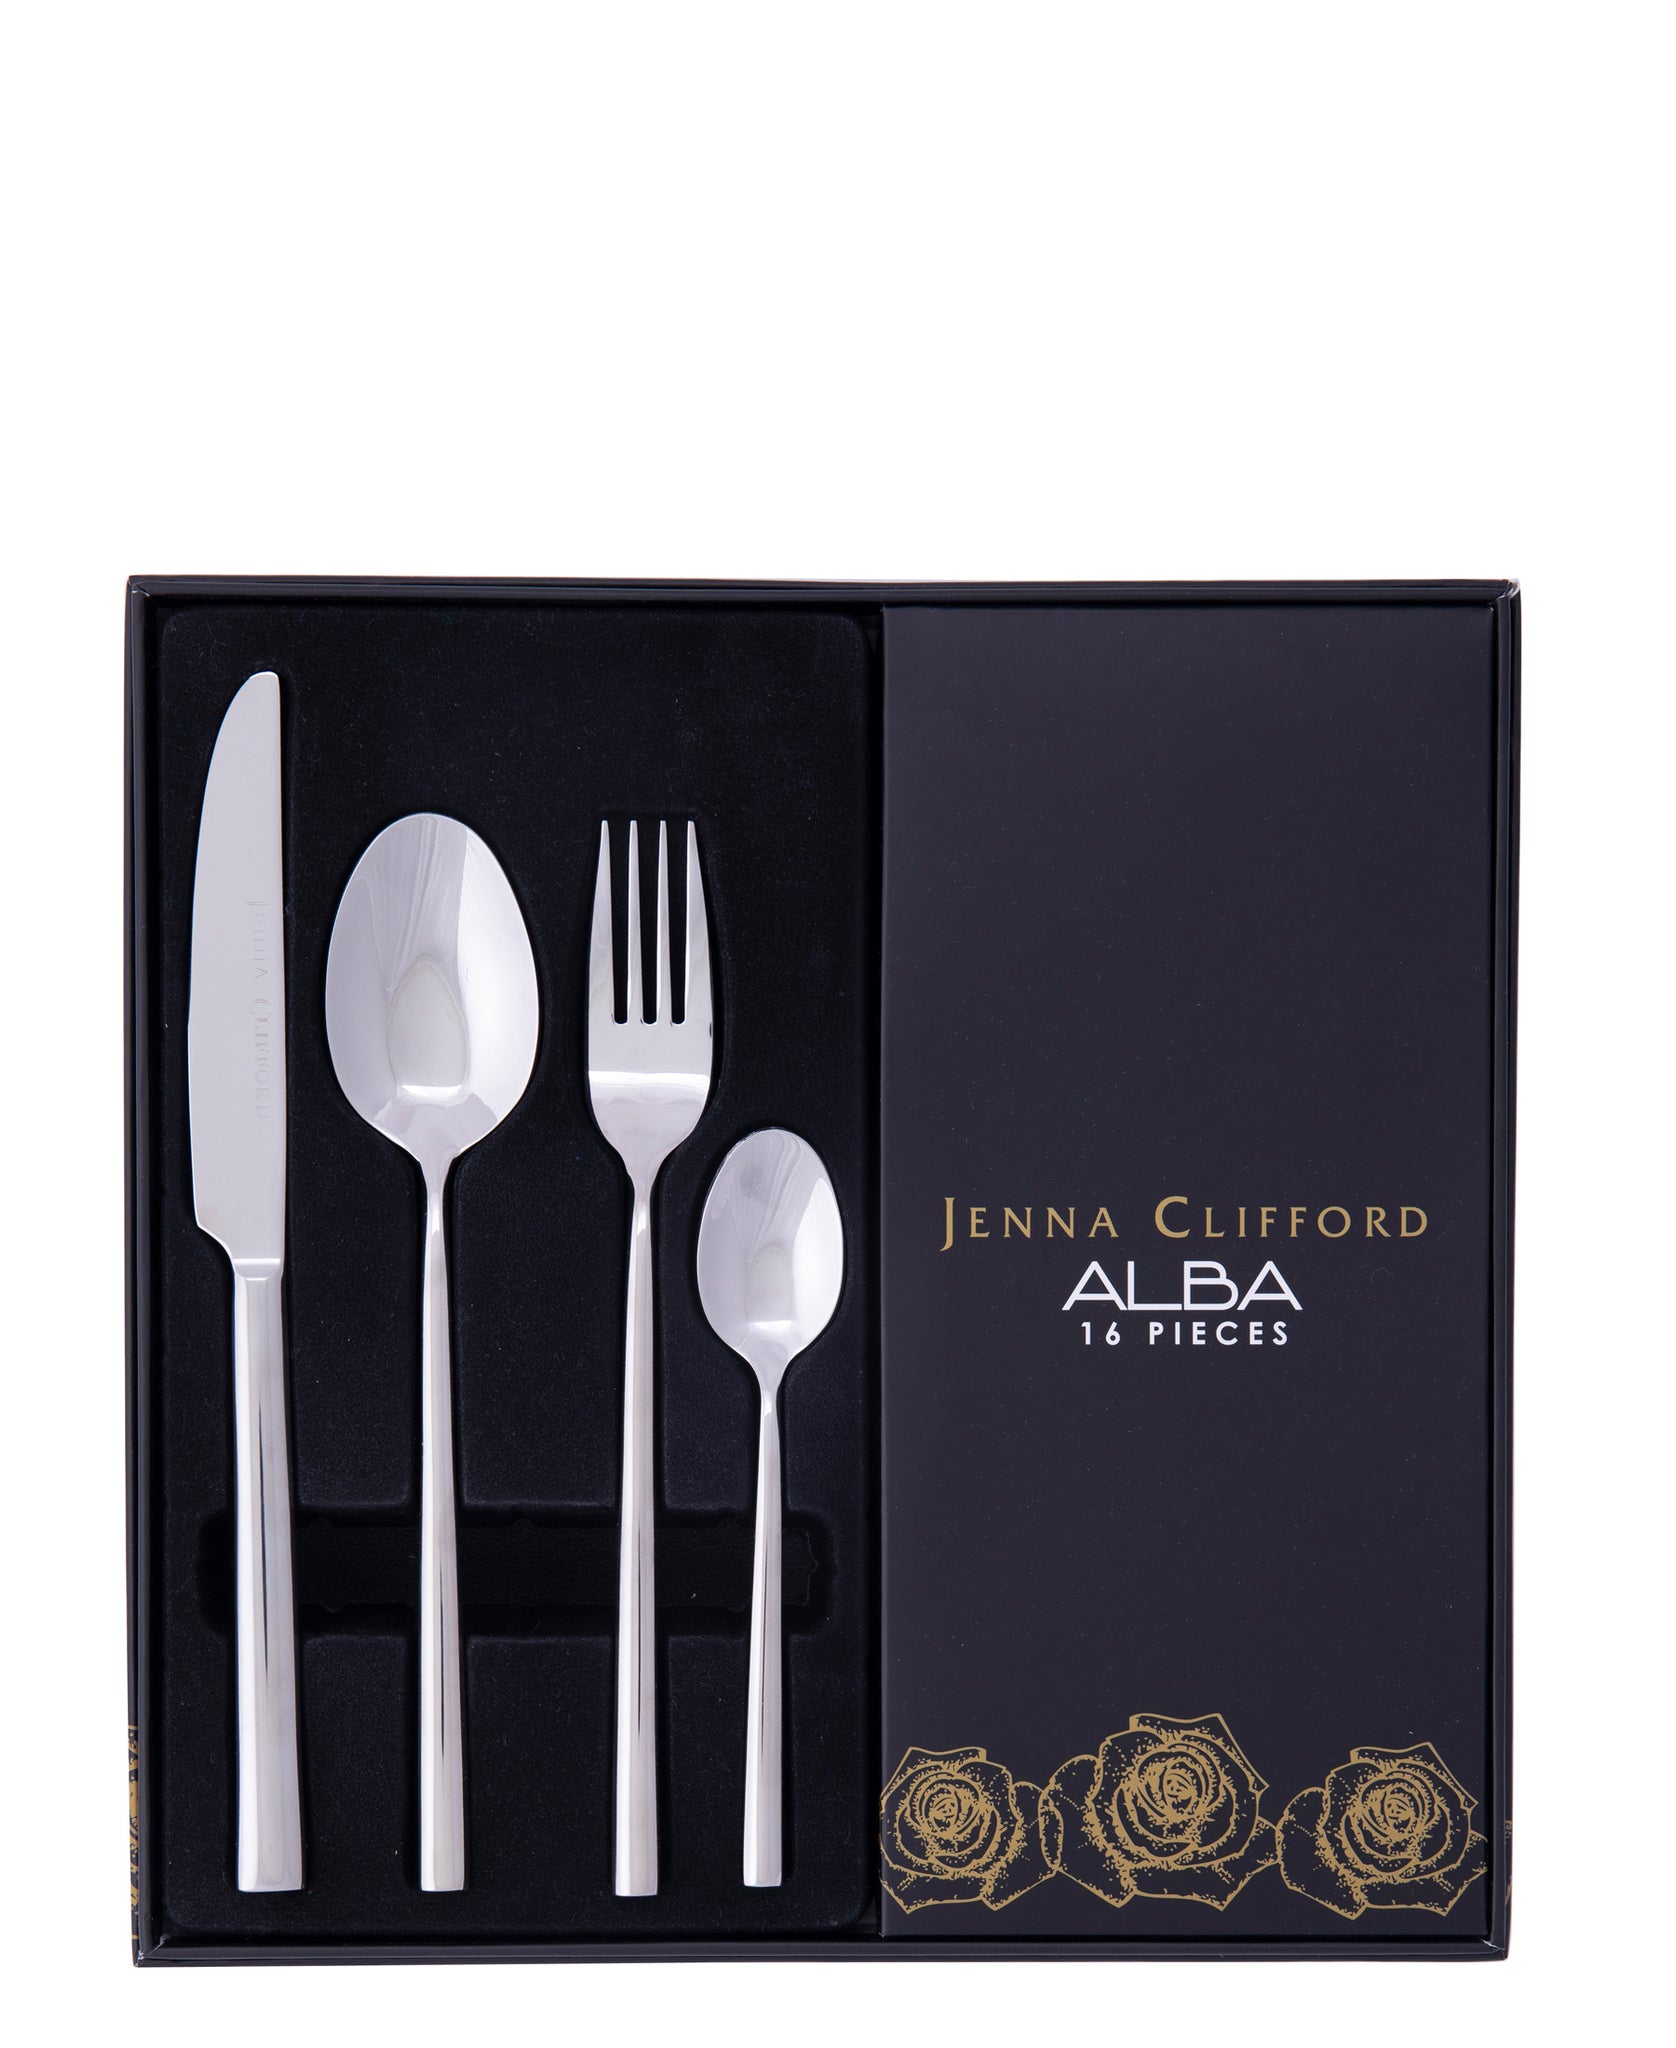 Jenna Clifford Alba 16 piece Cutlery Set - Silver